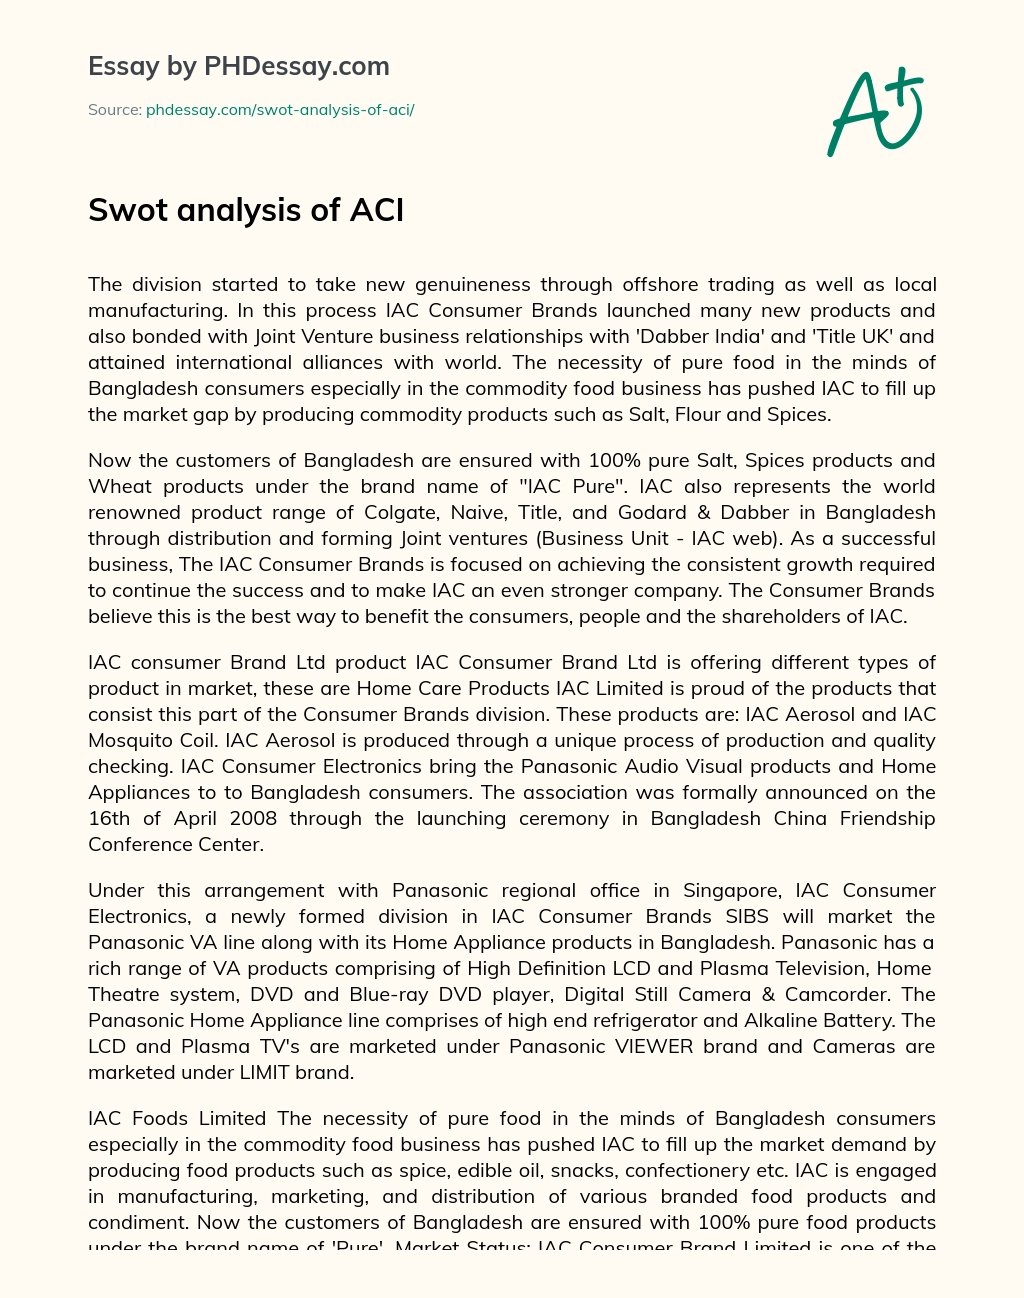 Swot analysis of ACI essay